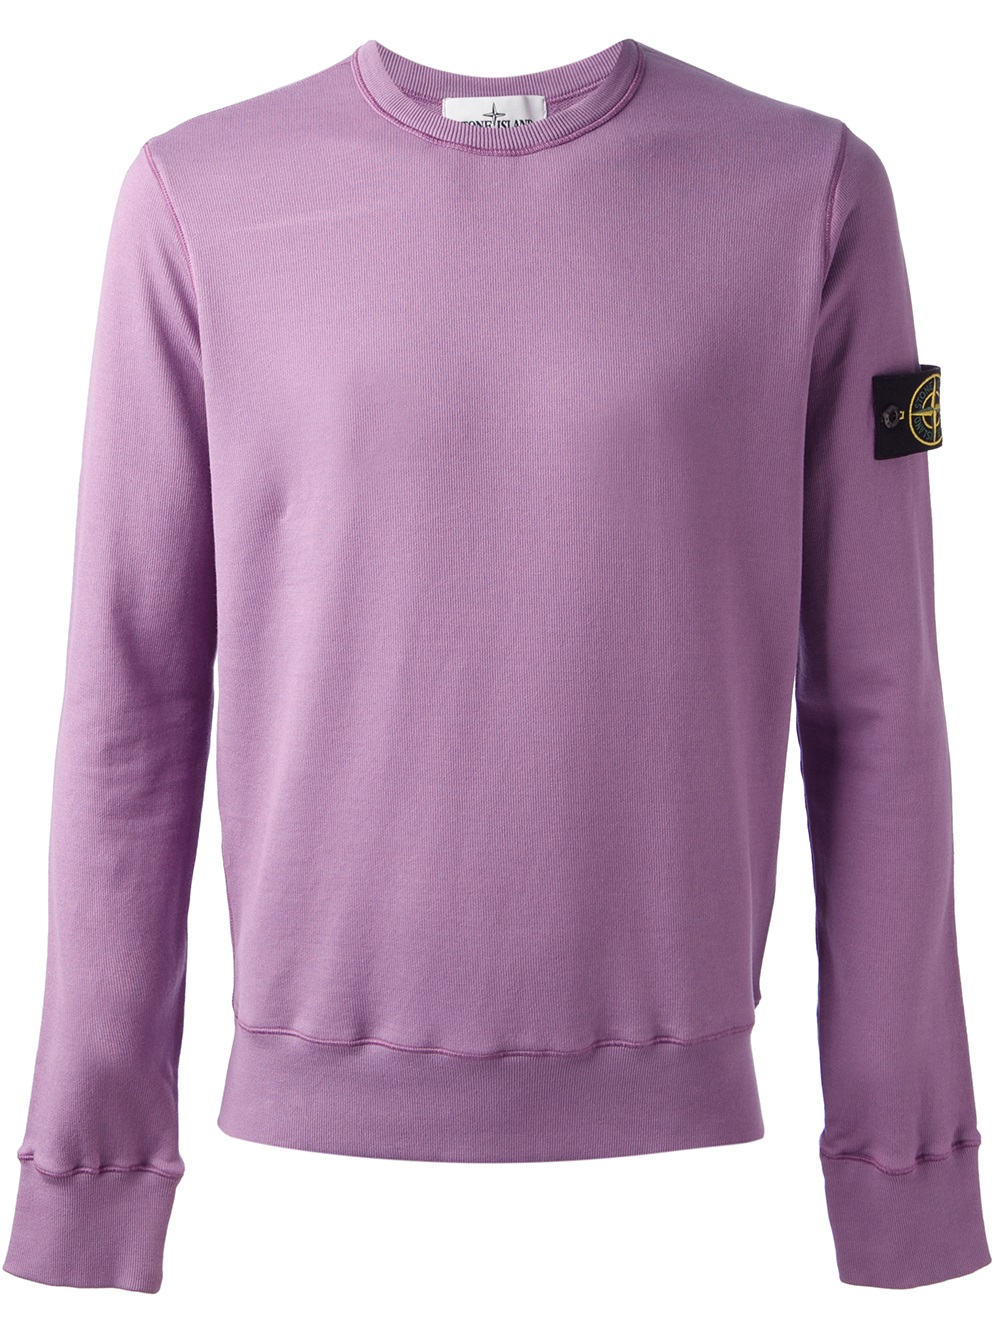 Stone Island Classic Sweater in Pink & Purple (Purple) for Men - Lyst